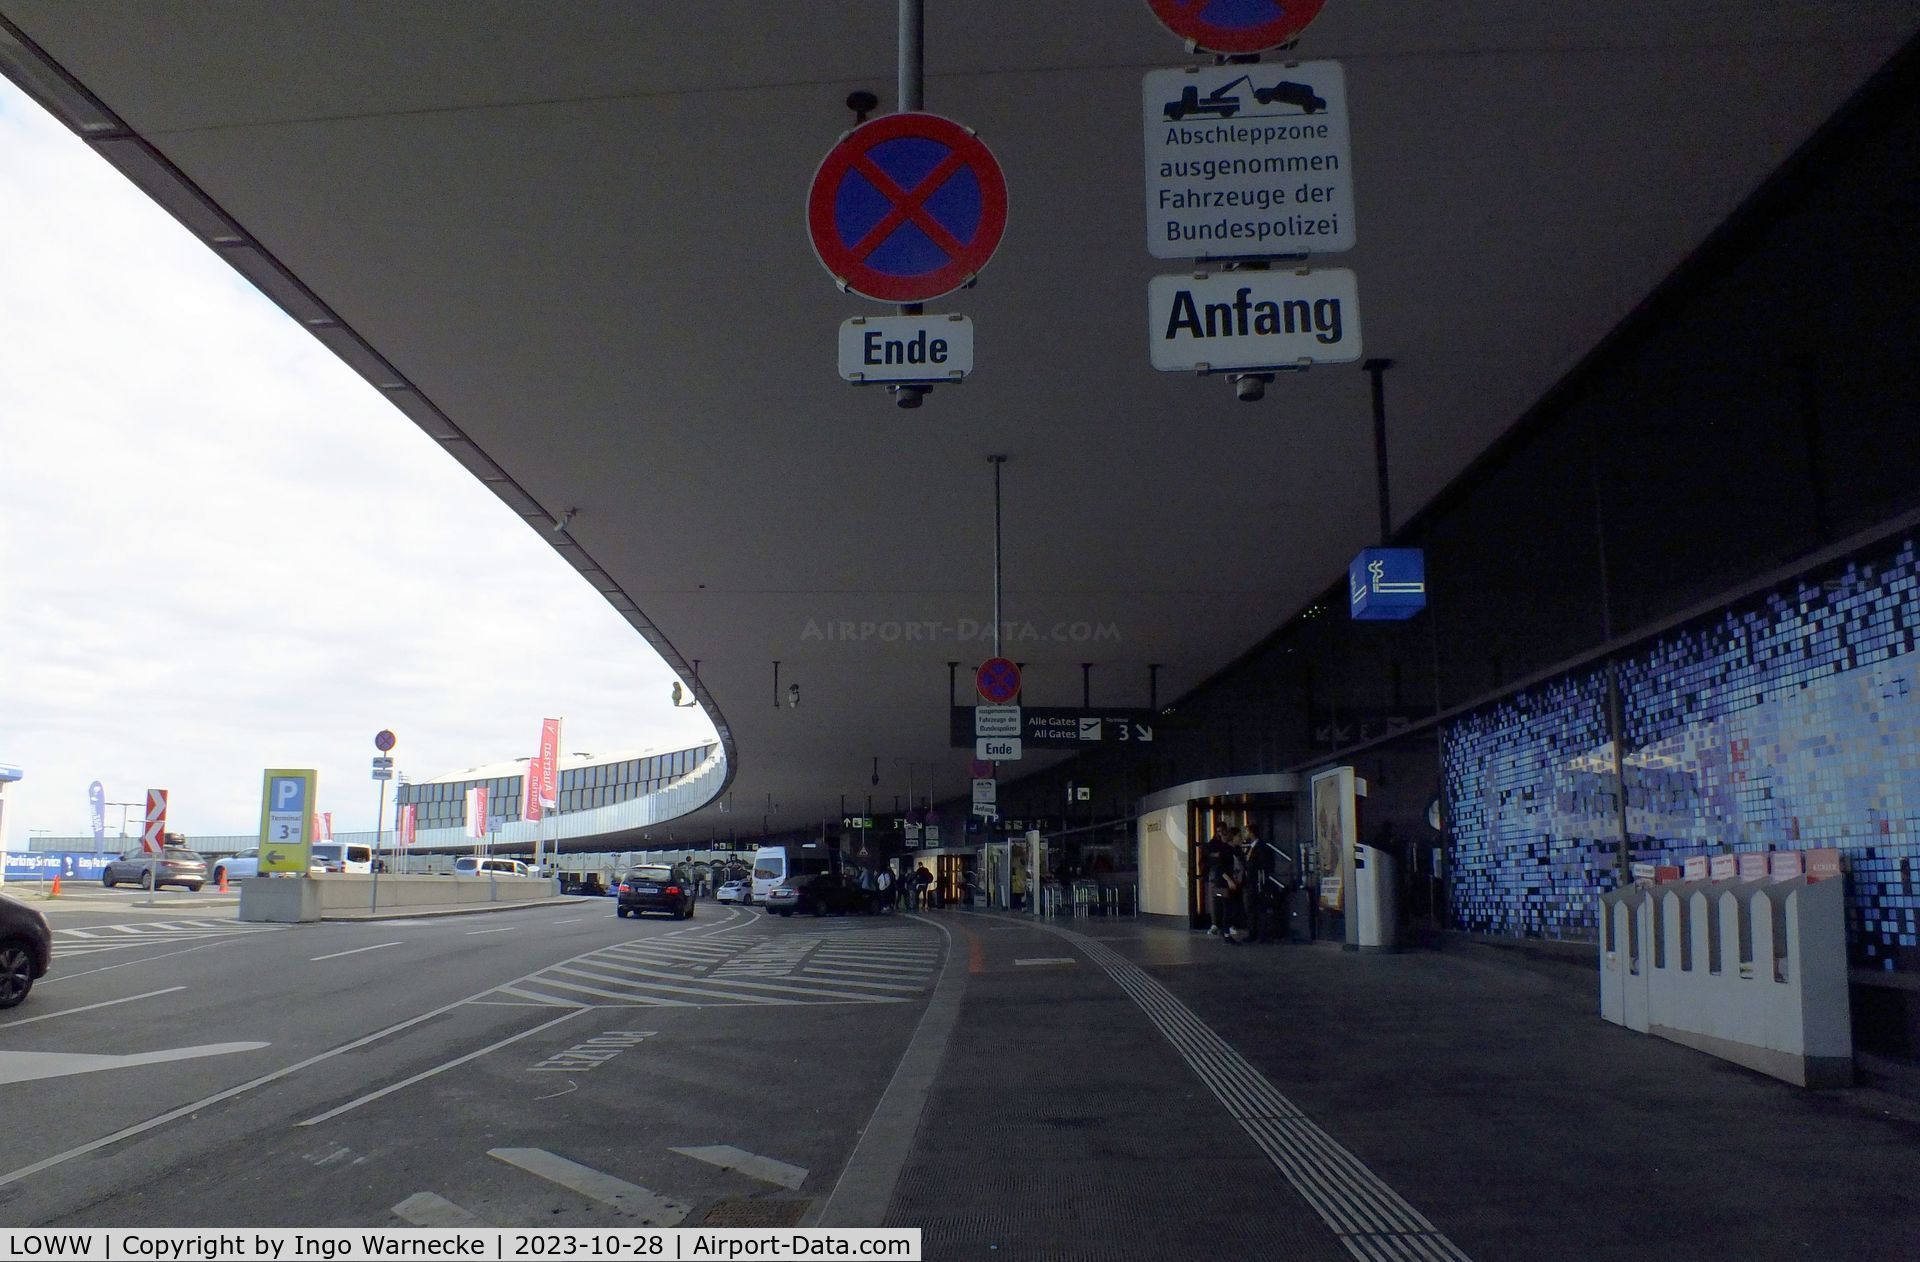 Vienna International Airport, Vienna Austria (LOWW) - streetside view of terminal 3 at Wien airport